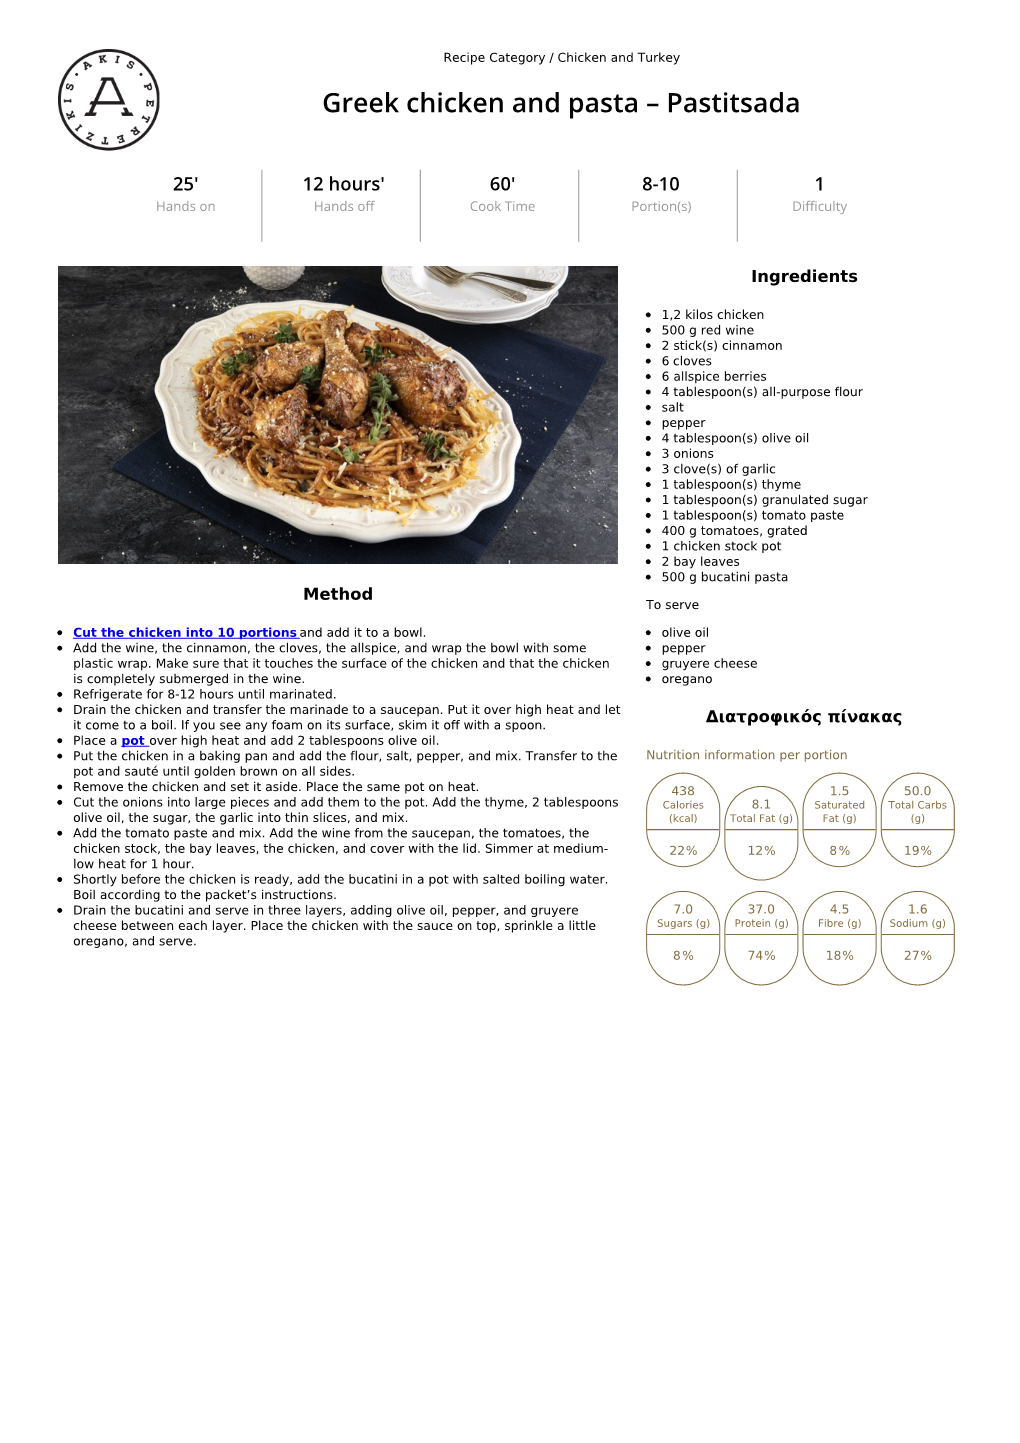 Greek Chicken and Pasta – Pastitsada